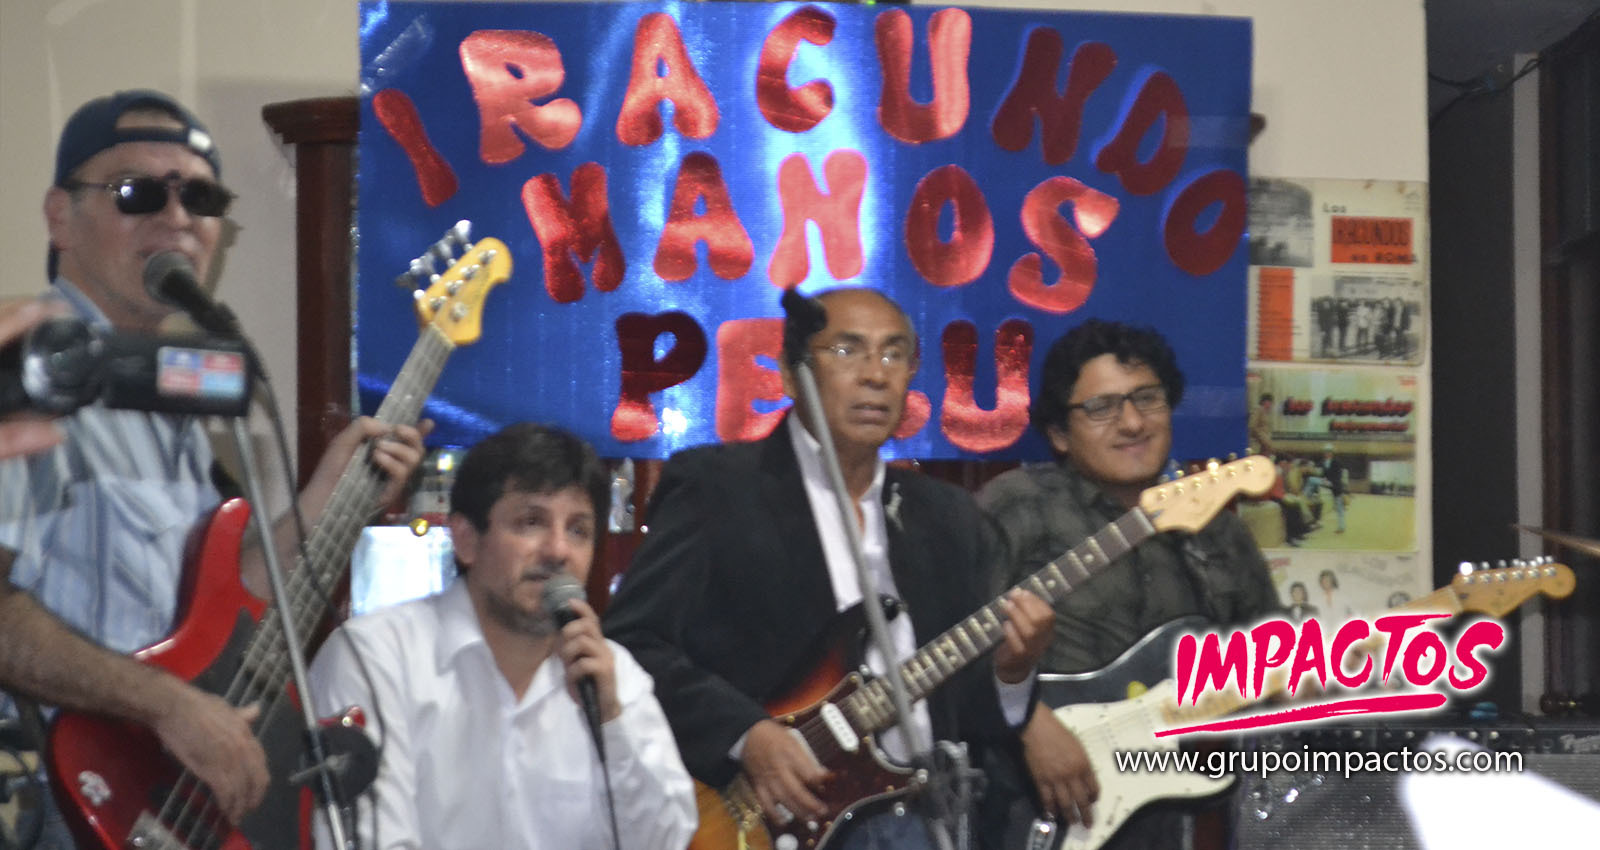 Jaime Pereda & Grupo IMPACTOS - Reunion de iracundomanos 2017 - Show musica del recuerdo - Show nueva ola